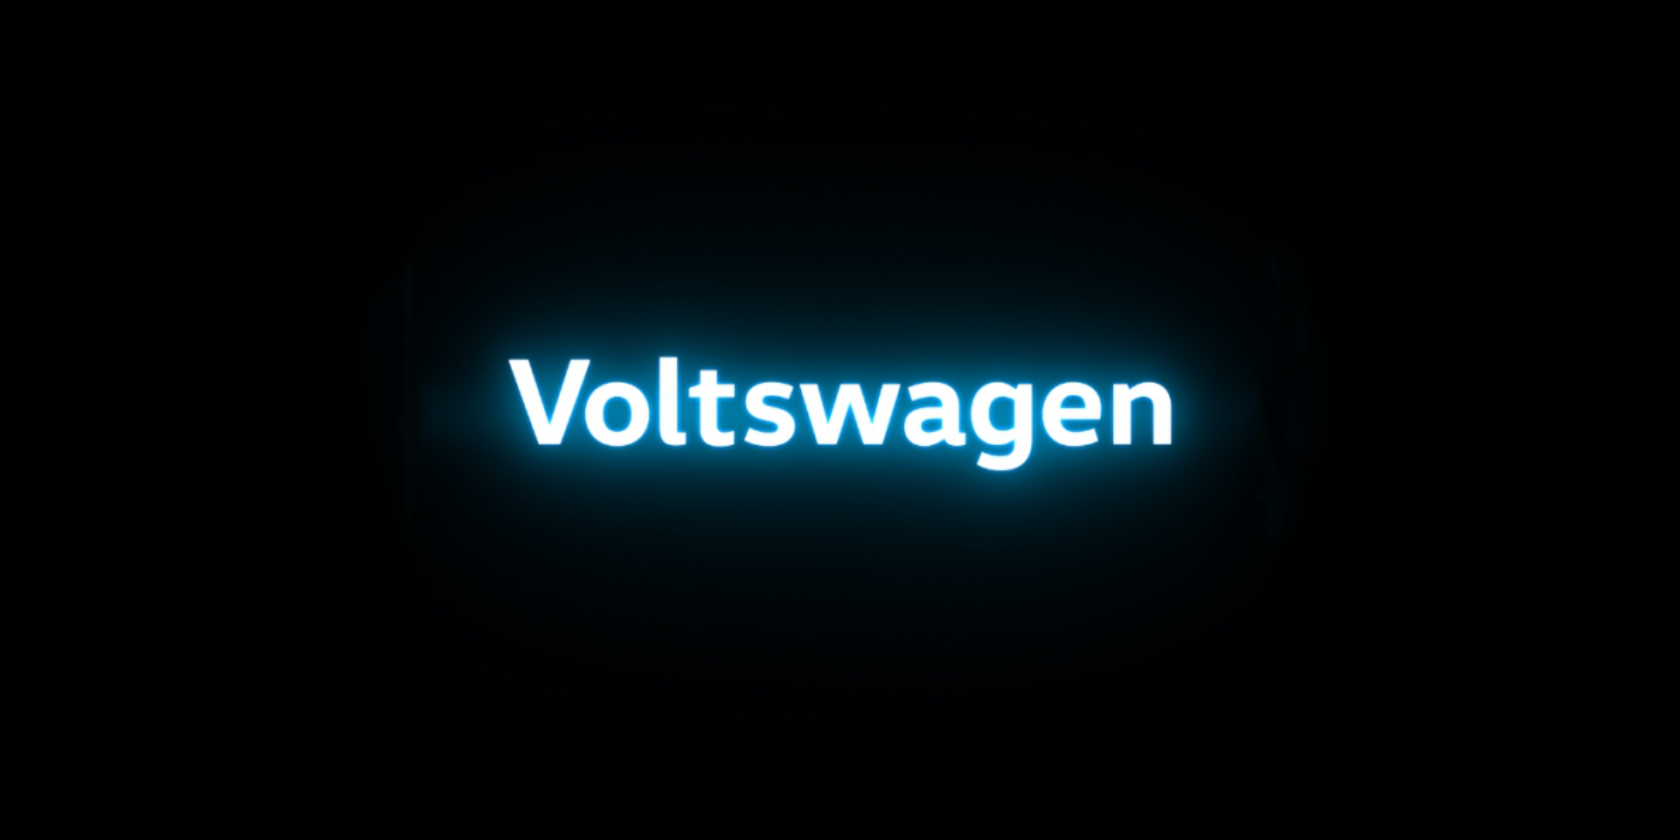 The Voltswagon logo